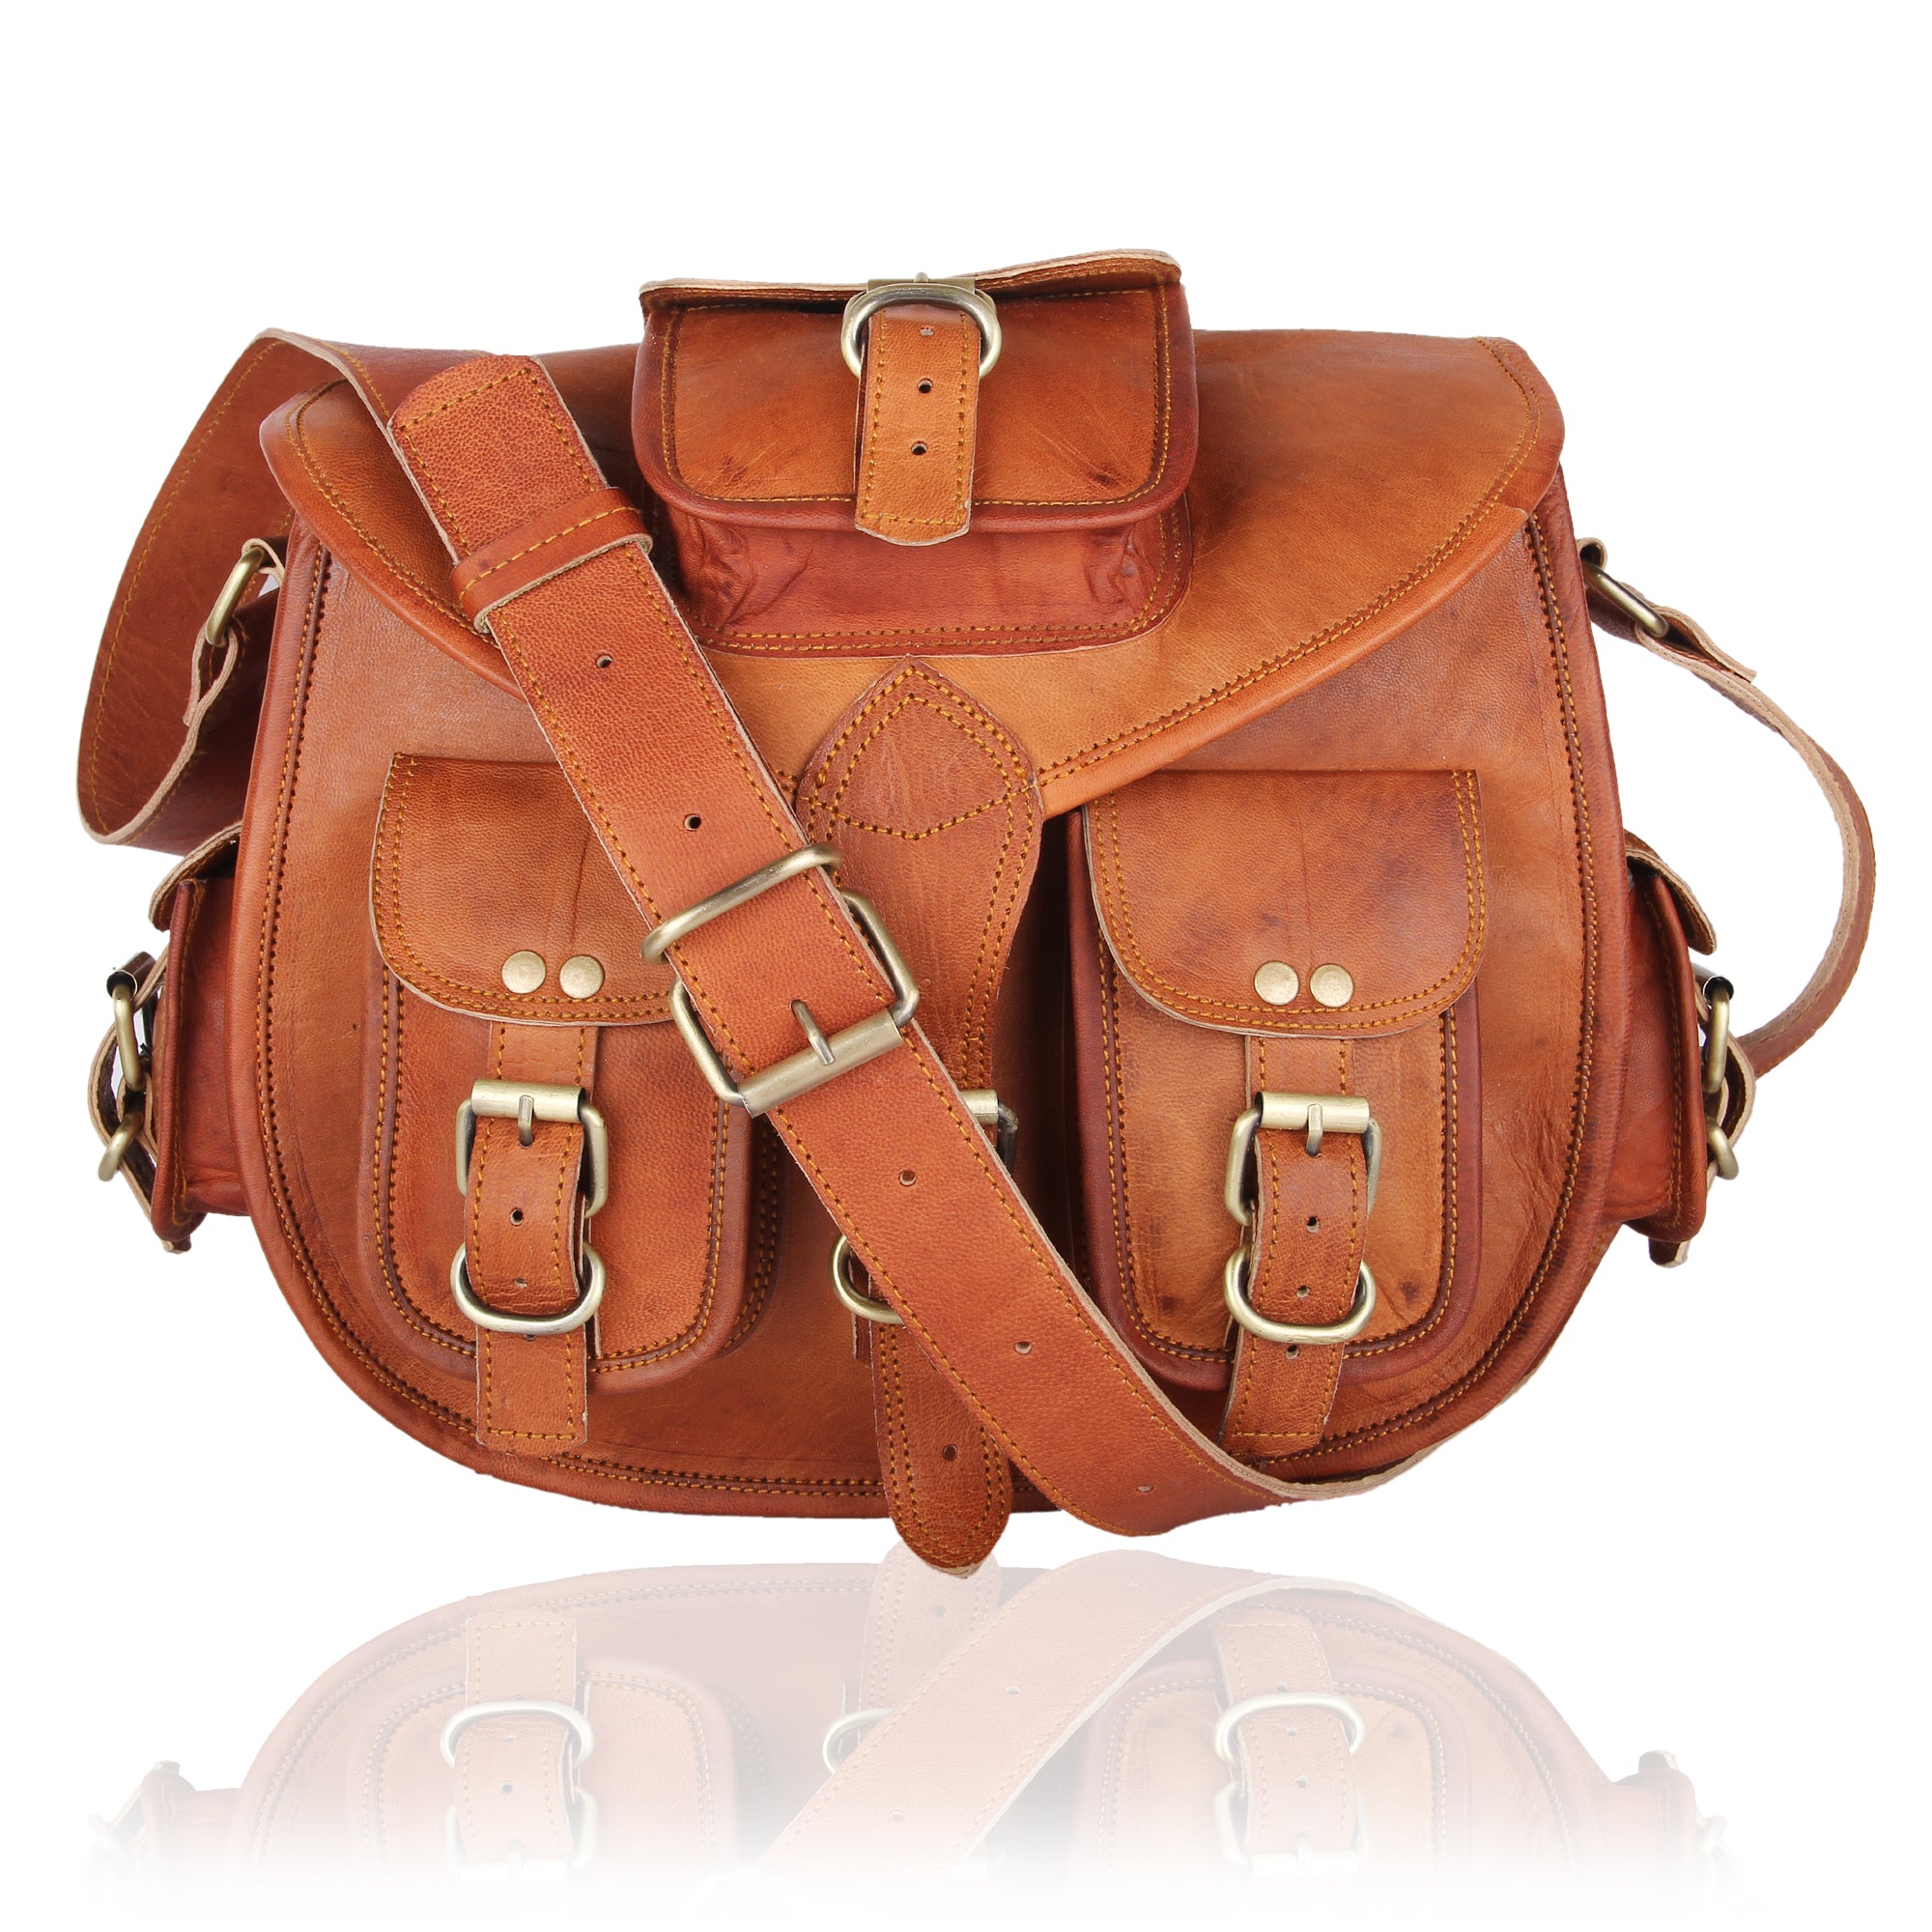  URBAN DEZIRE Women's Leather bag Purse Gypsy Bag